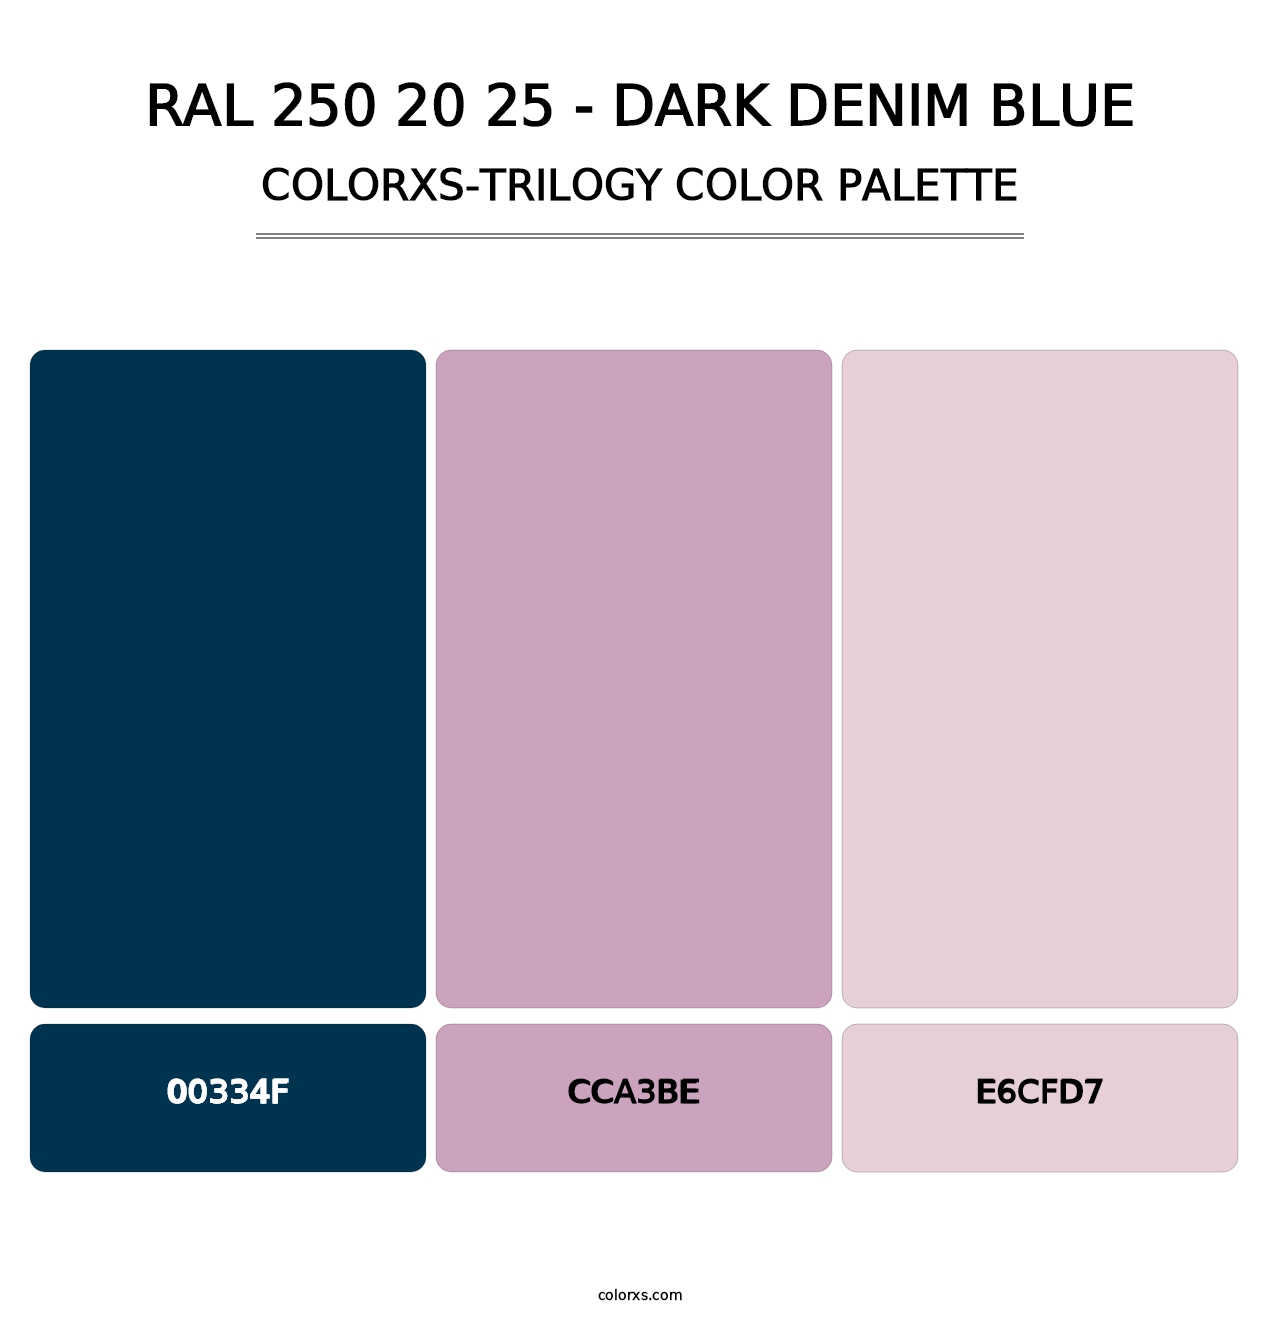 RAL 250 20 25 - Dark Denim Blue - Colorxs Trilogy Palette